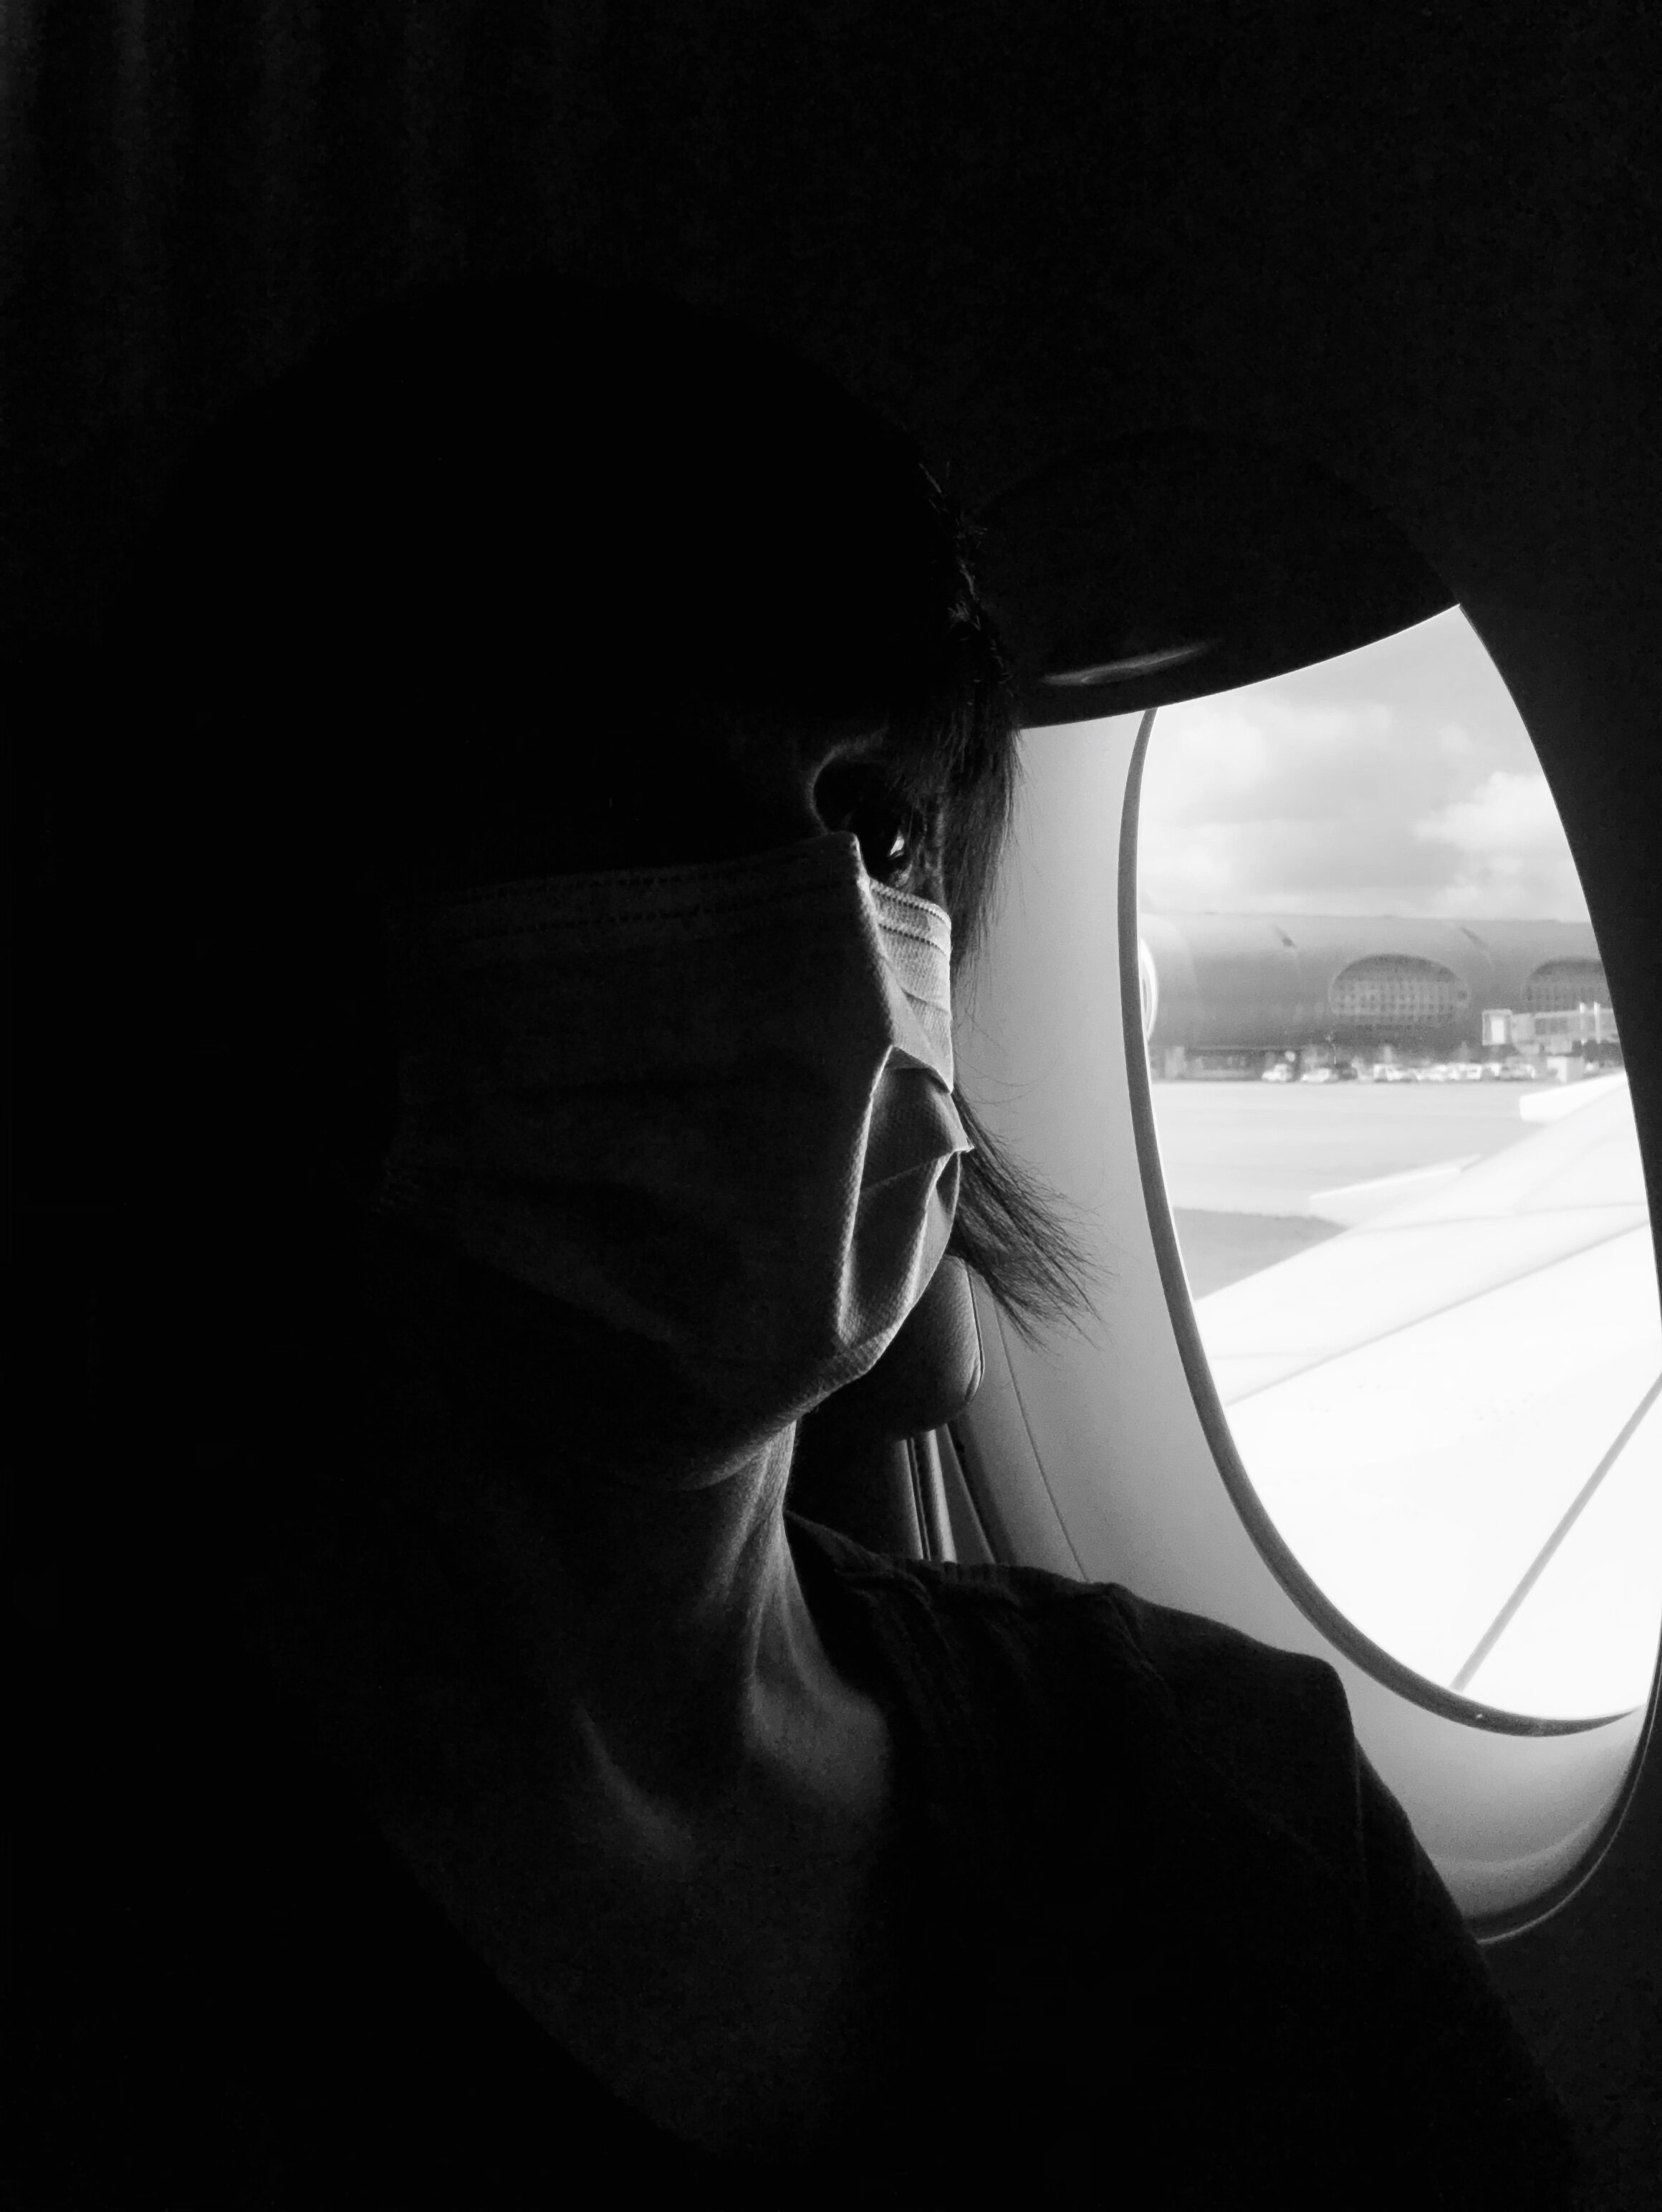 Mandatory selfie during the return flight